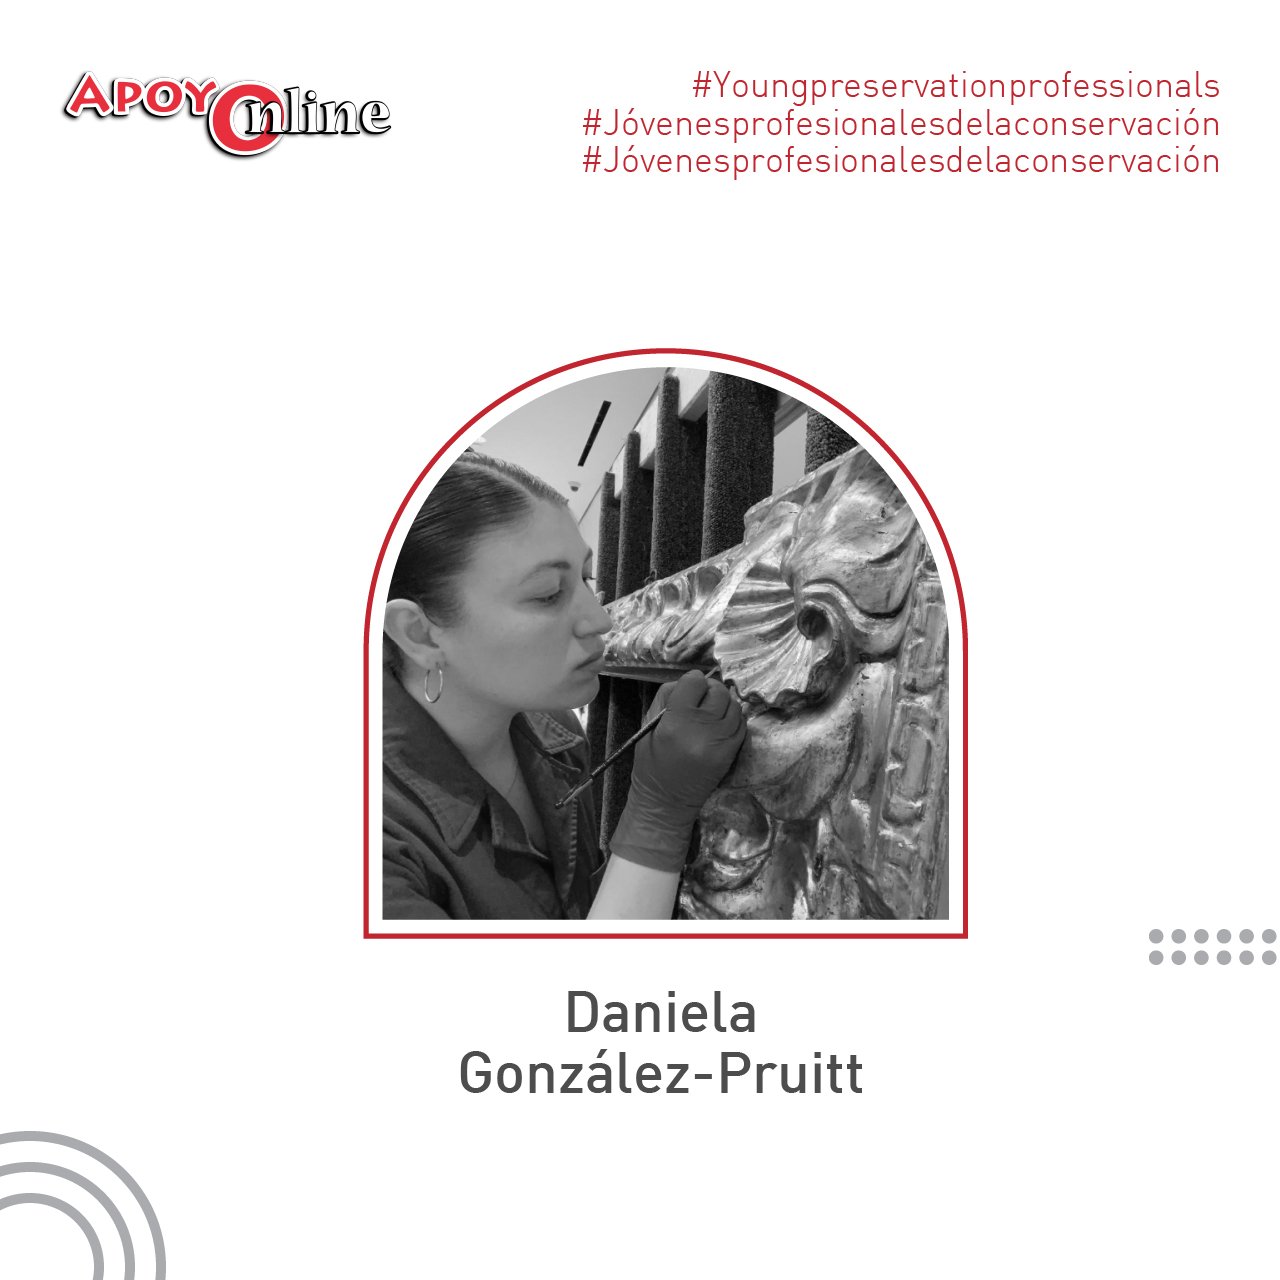 #Youngpreservationprofessionals - Daniela González-Pruitt